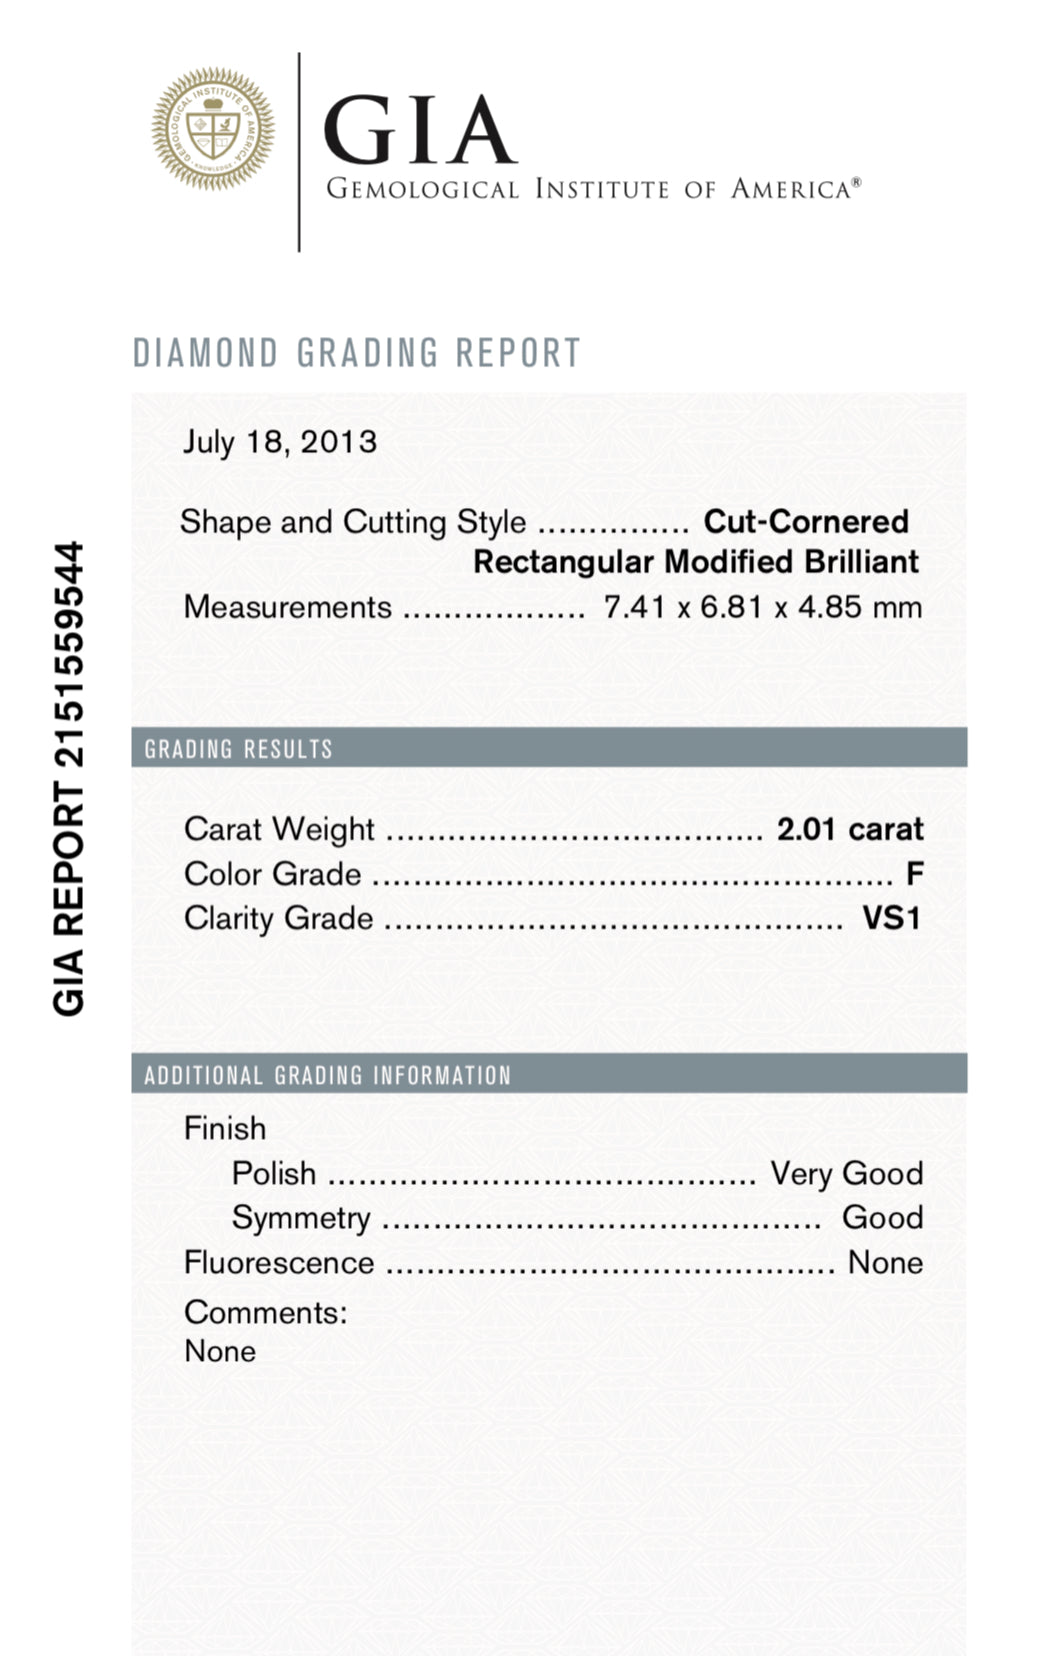 2.01 carat Natural Radiant Cut Diamond , Color F , Clarity VS1 - GIA 2151559544